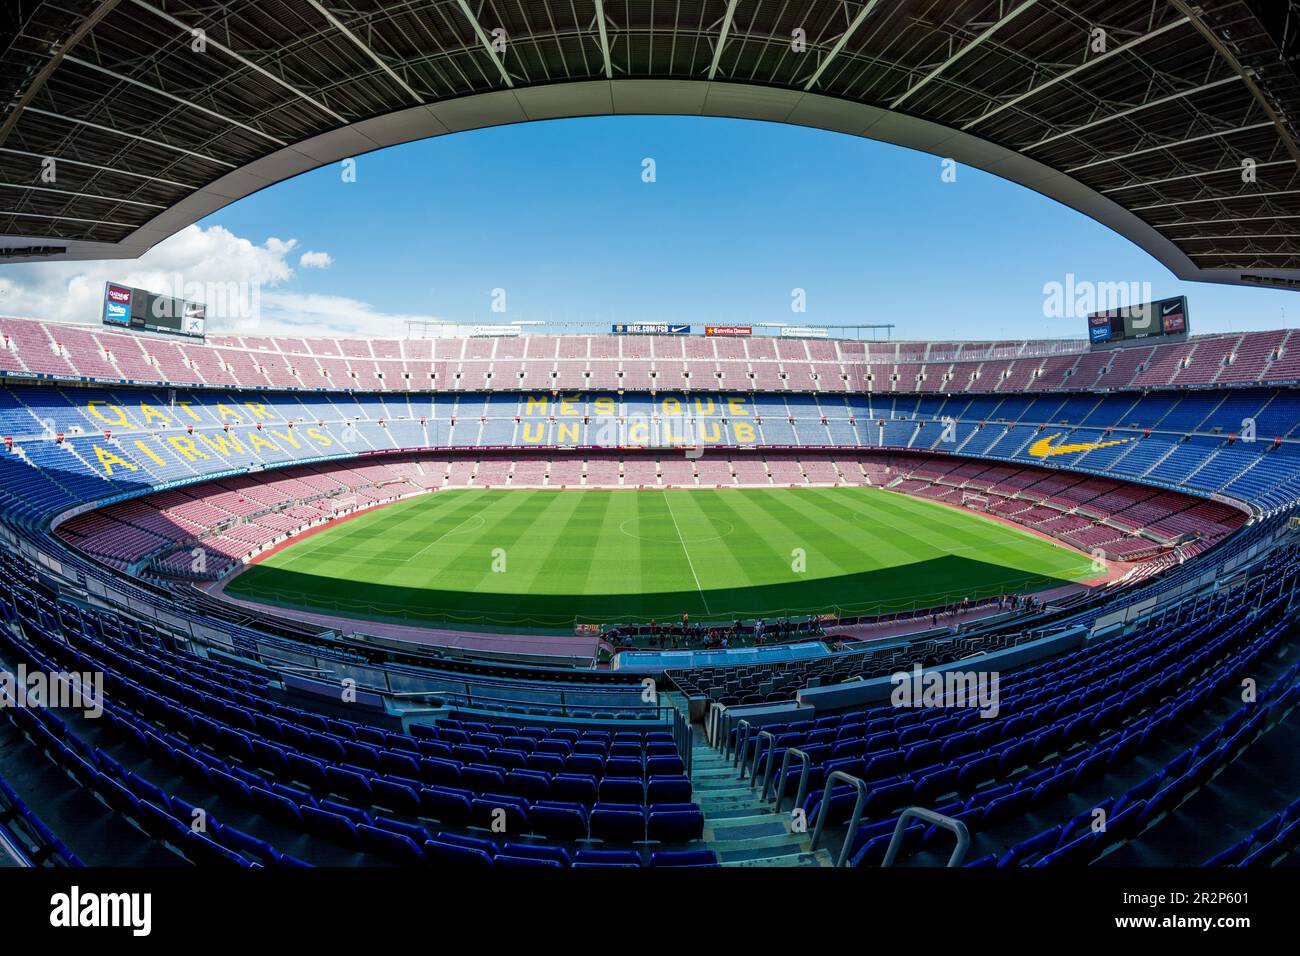 Camp Nou, home of the Football club Barcelona, Barcelona, Spain. Stock Photo